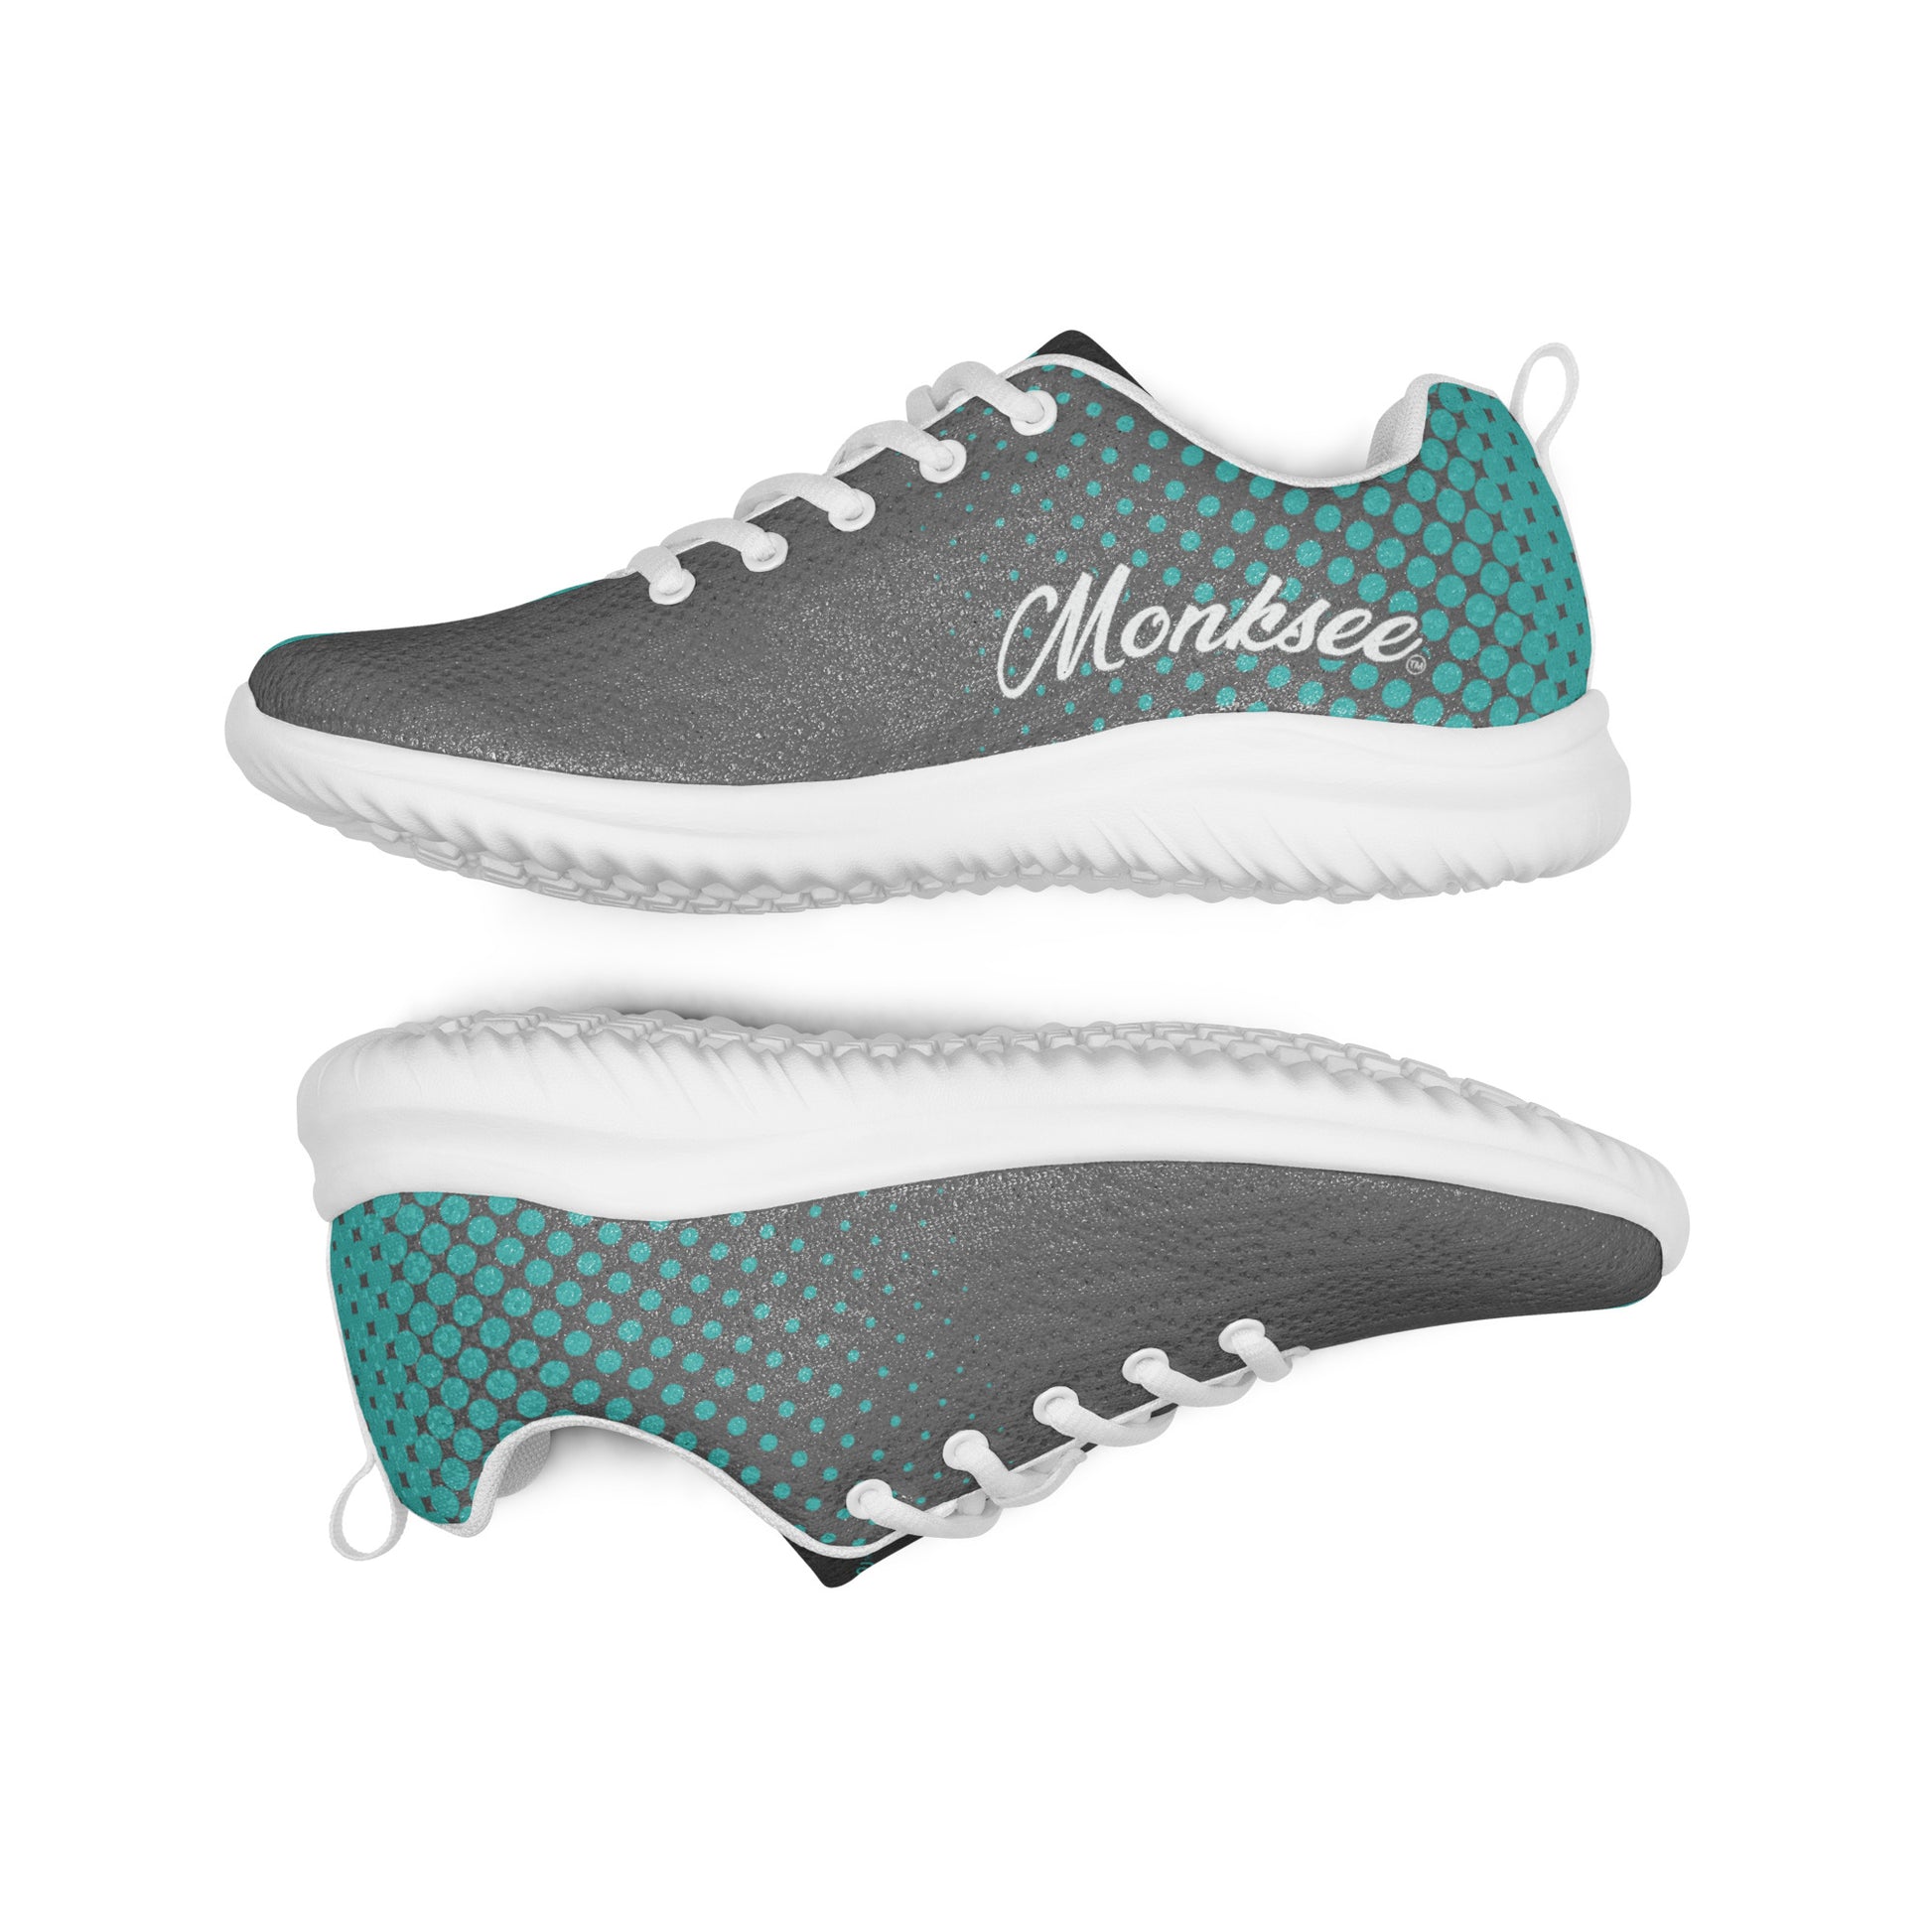 SharkSkinz - Women’s athletic shoes.